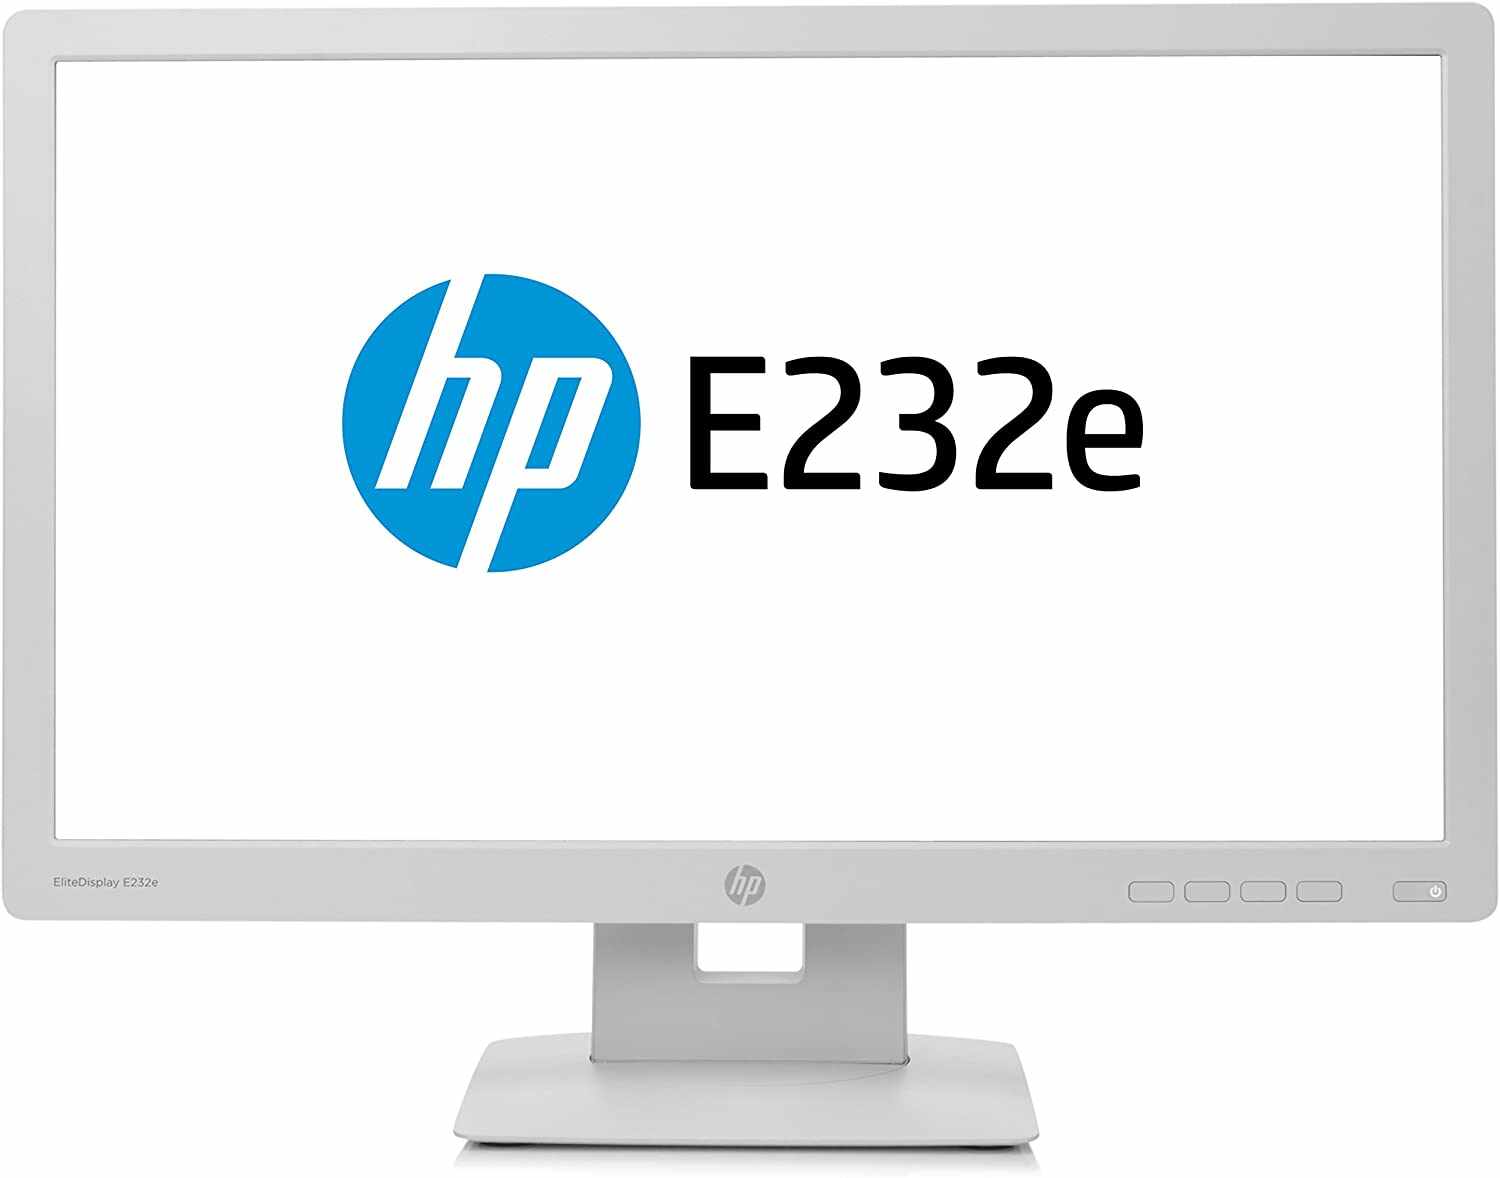 Monitor HP E232e, 23 Inch Full HD IPS LED, VGA, HDMI, Display Port, USB